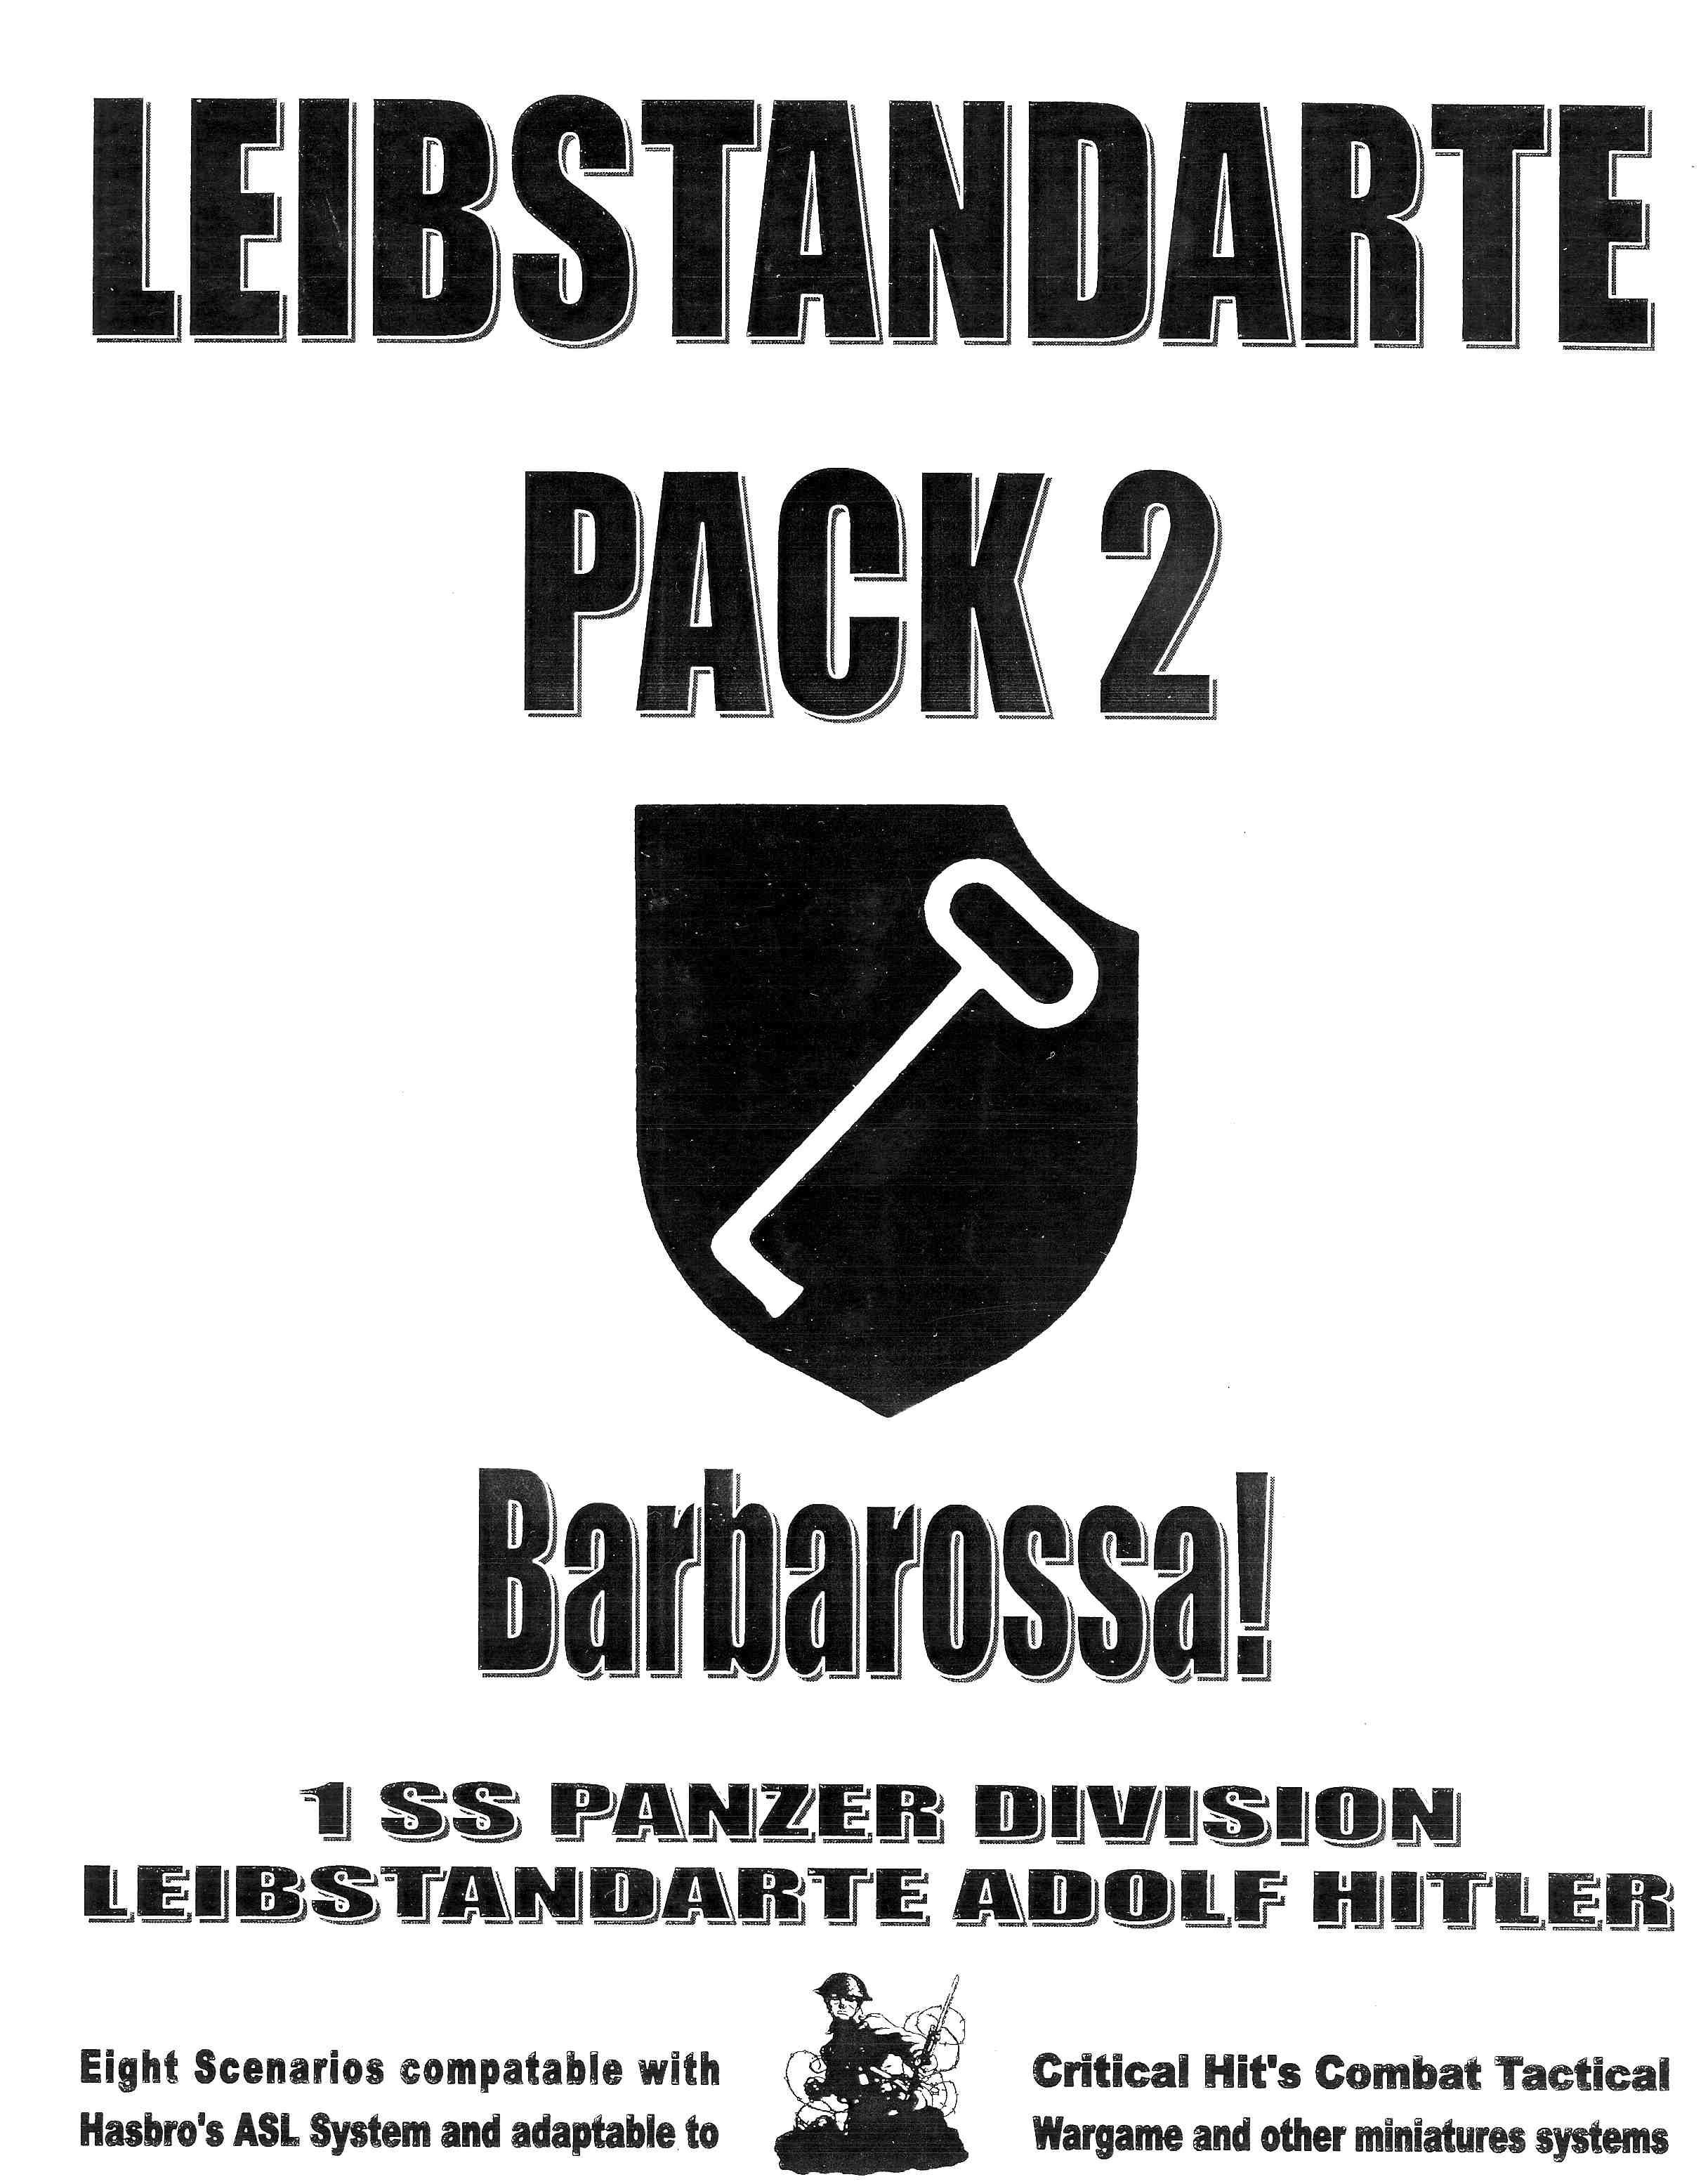 Leibstandarte Pack 2: Barbarossa!